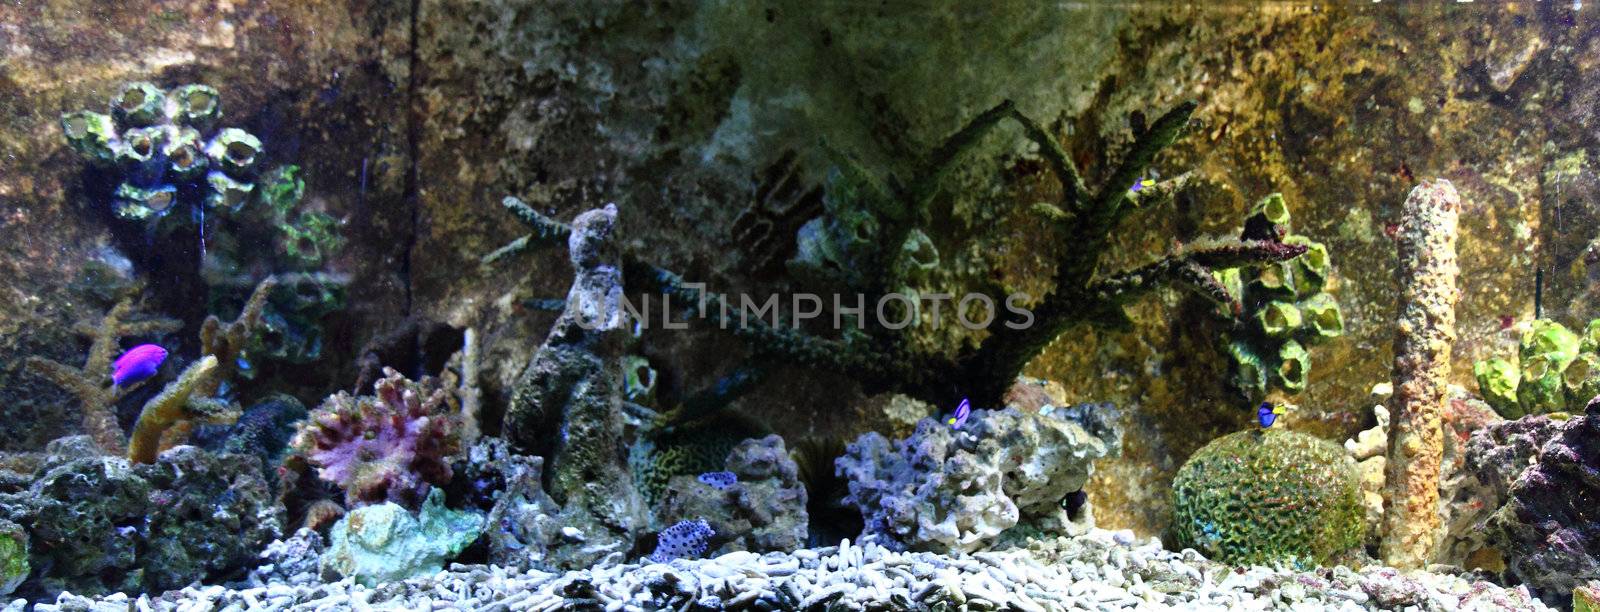 aquarium background  by jonnysek